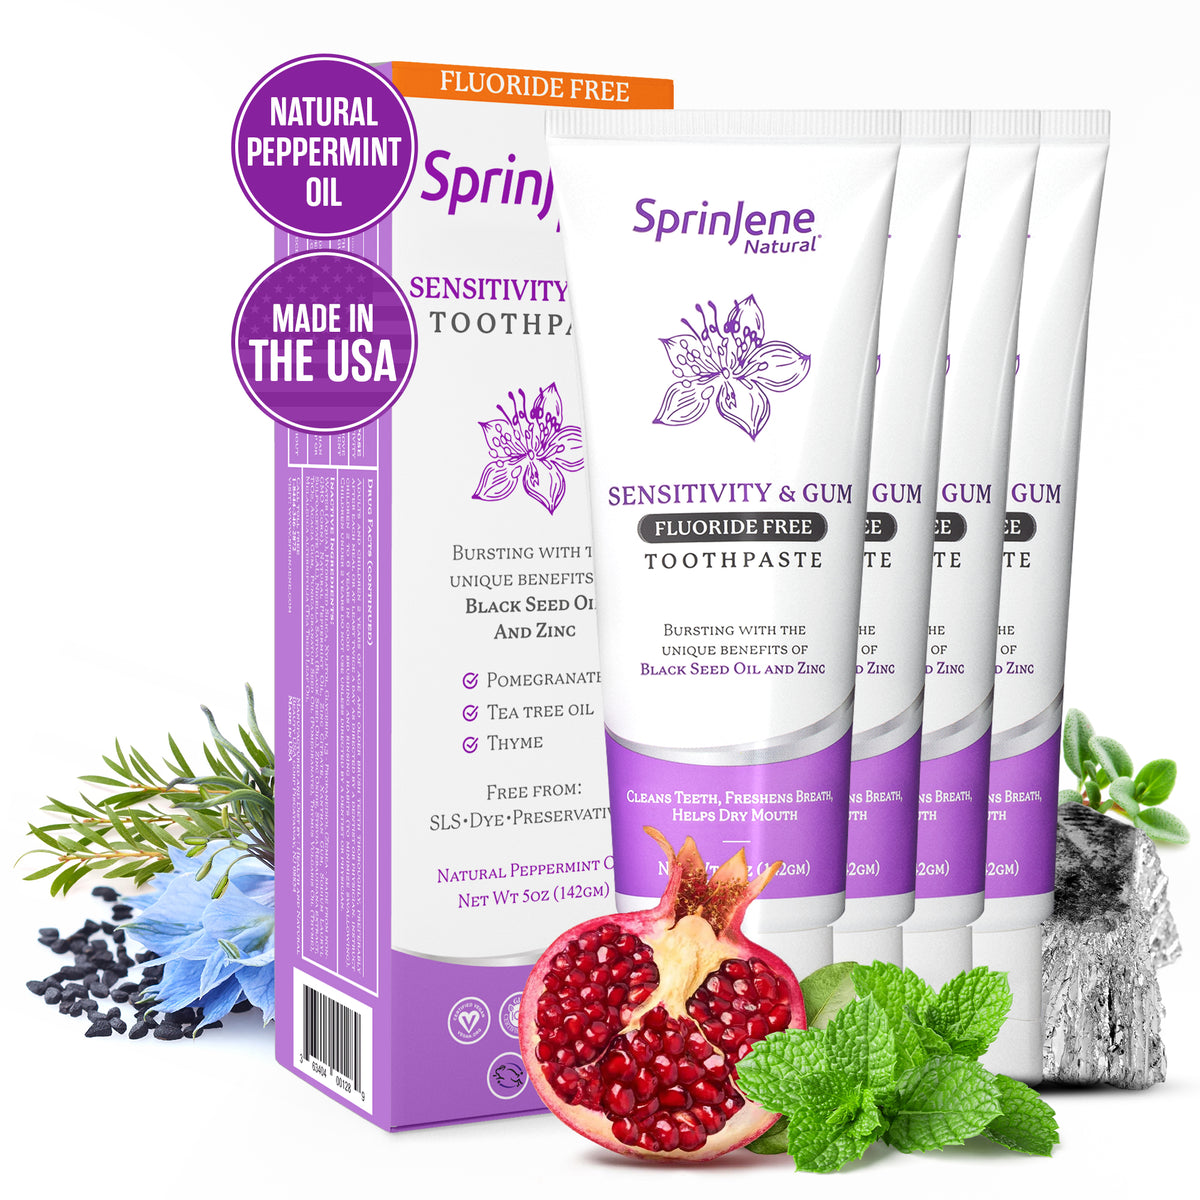 SprinJene Natural® Sensitivity & Gum Fluoride Free Toothpaste 5oz